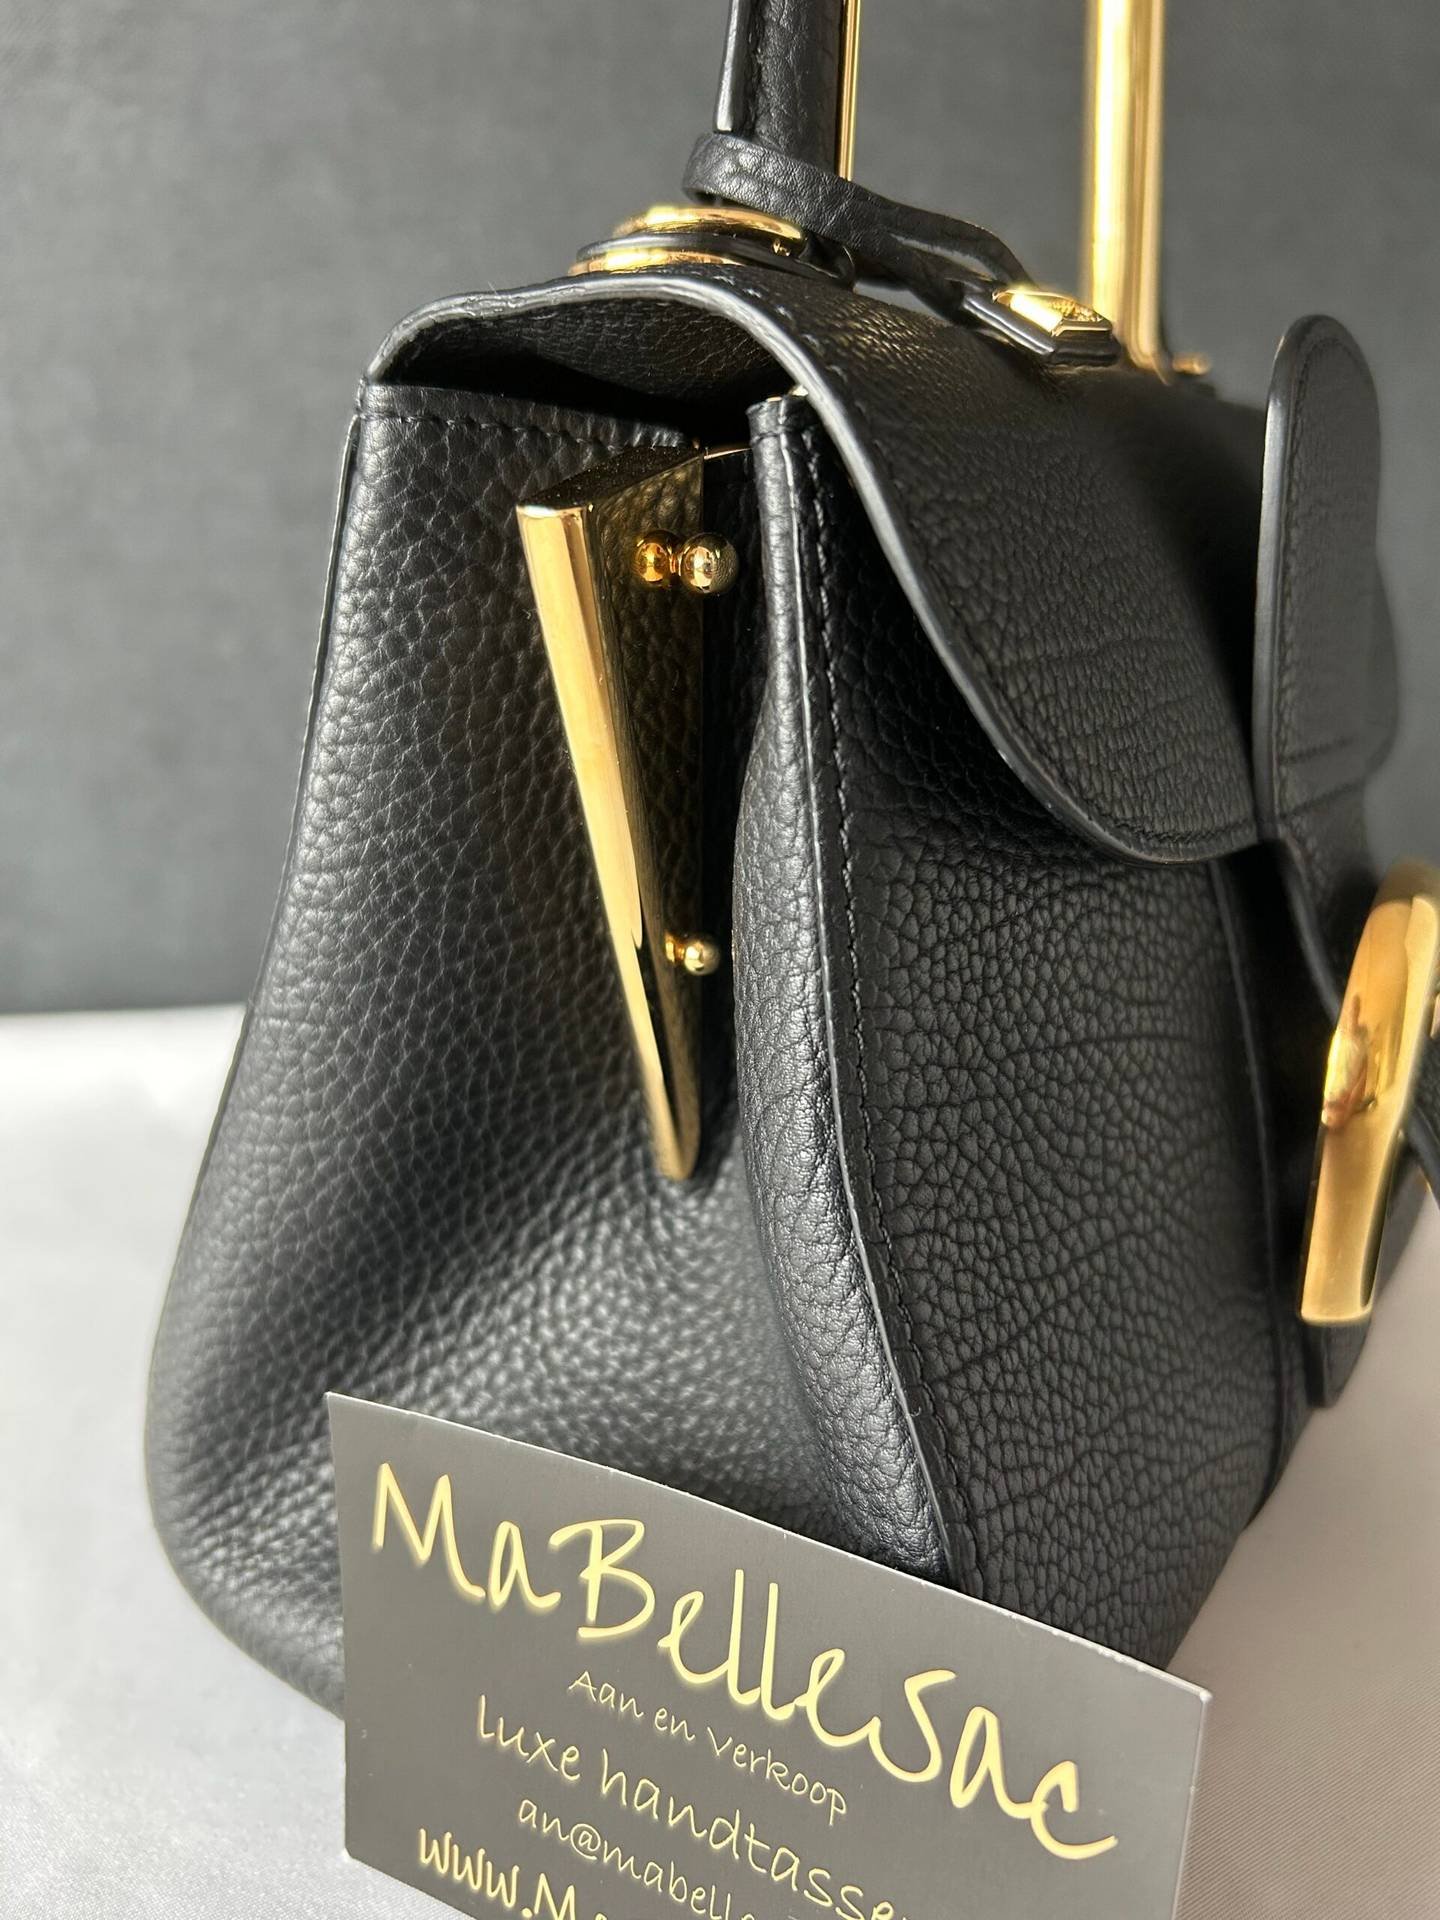 Delvaux Brillant mini Black - MaBelleSac